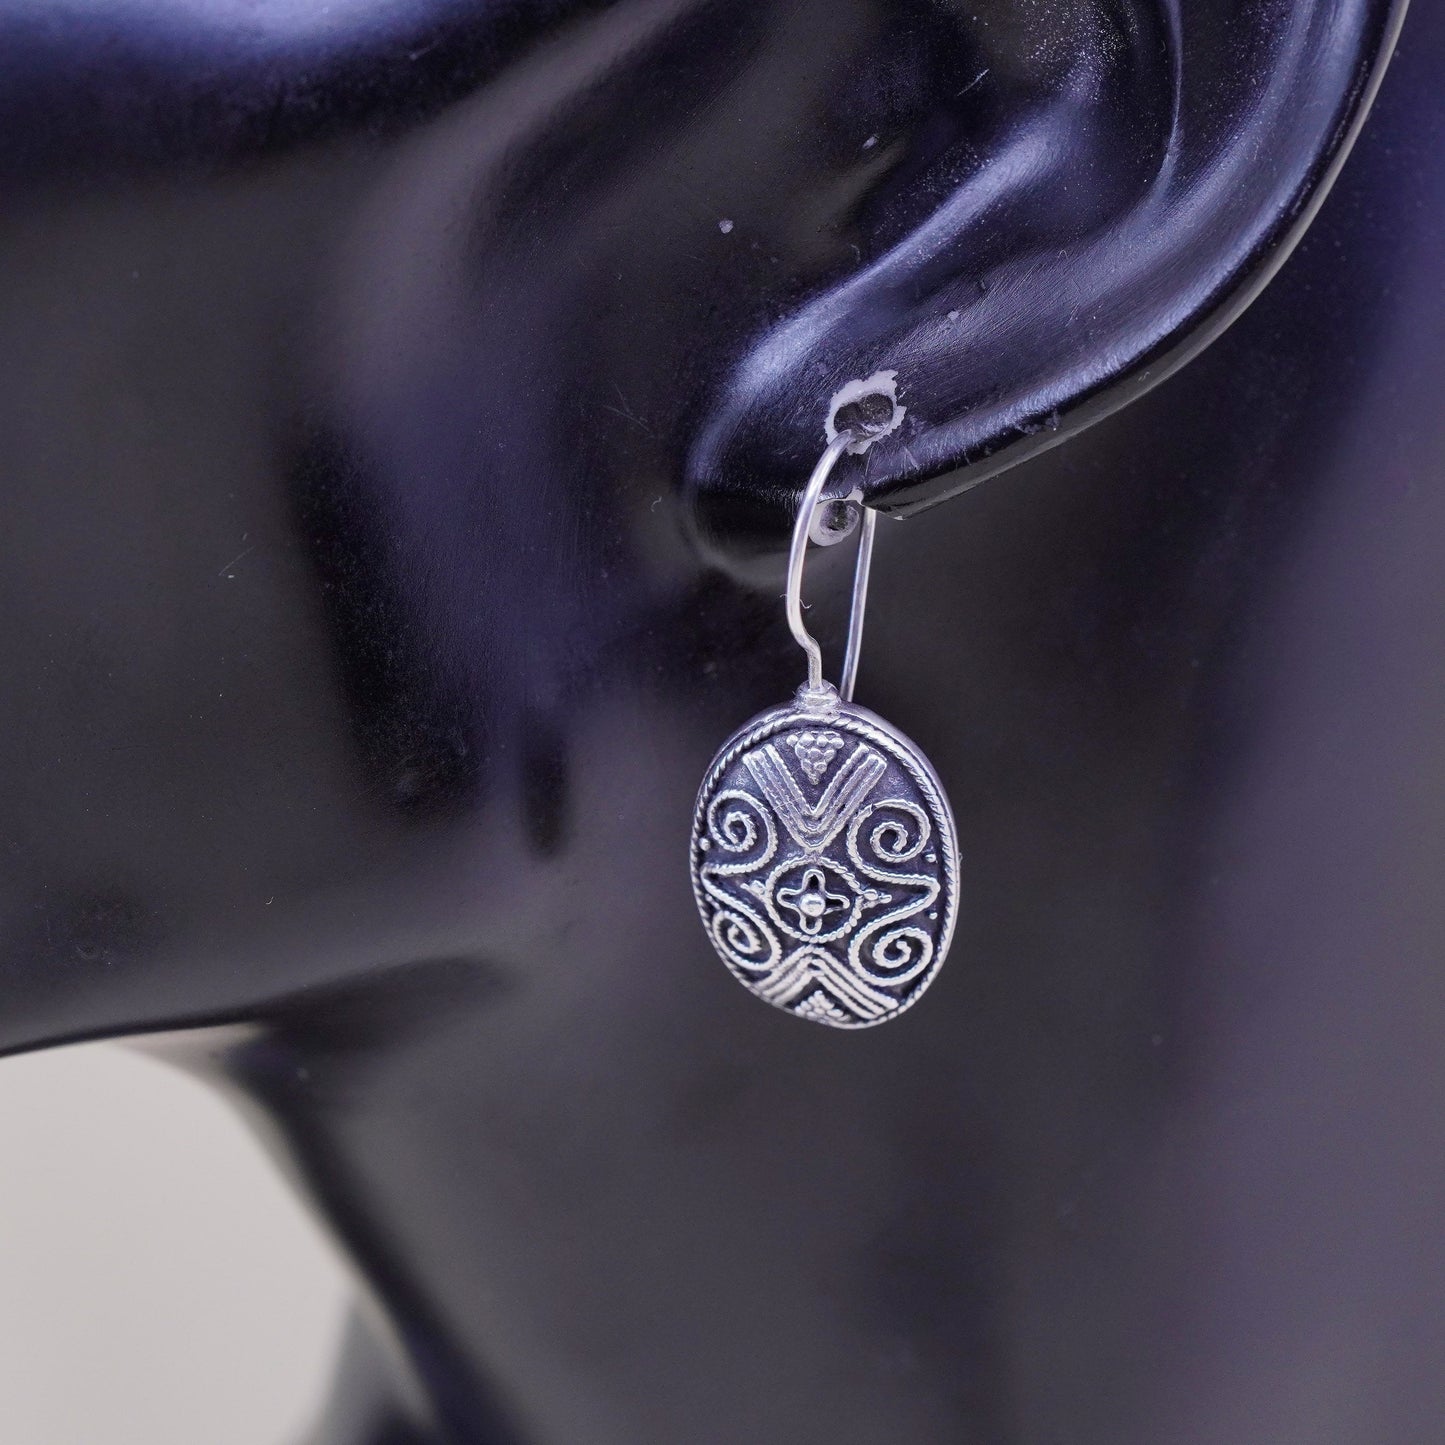 Vintage Sterling silver handmade earrings, 925 filigree oval